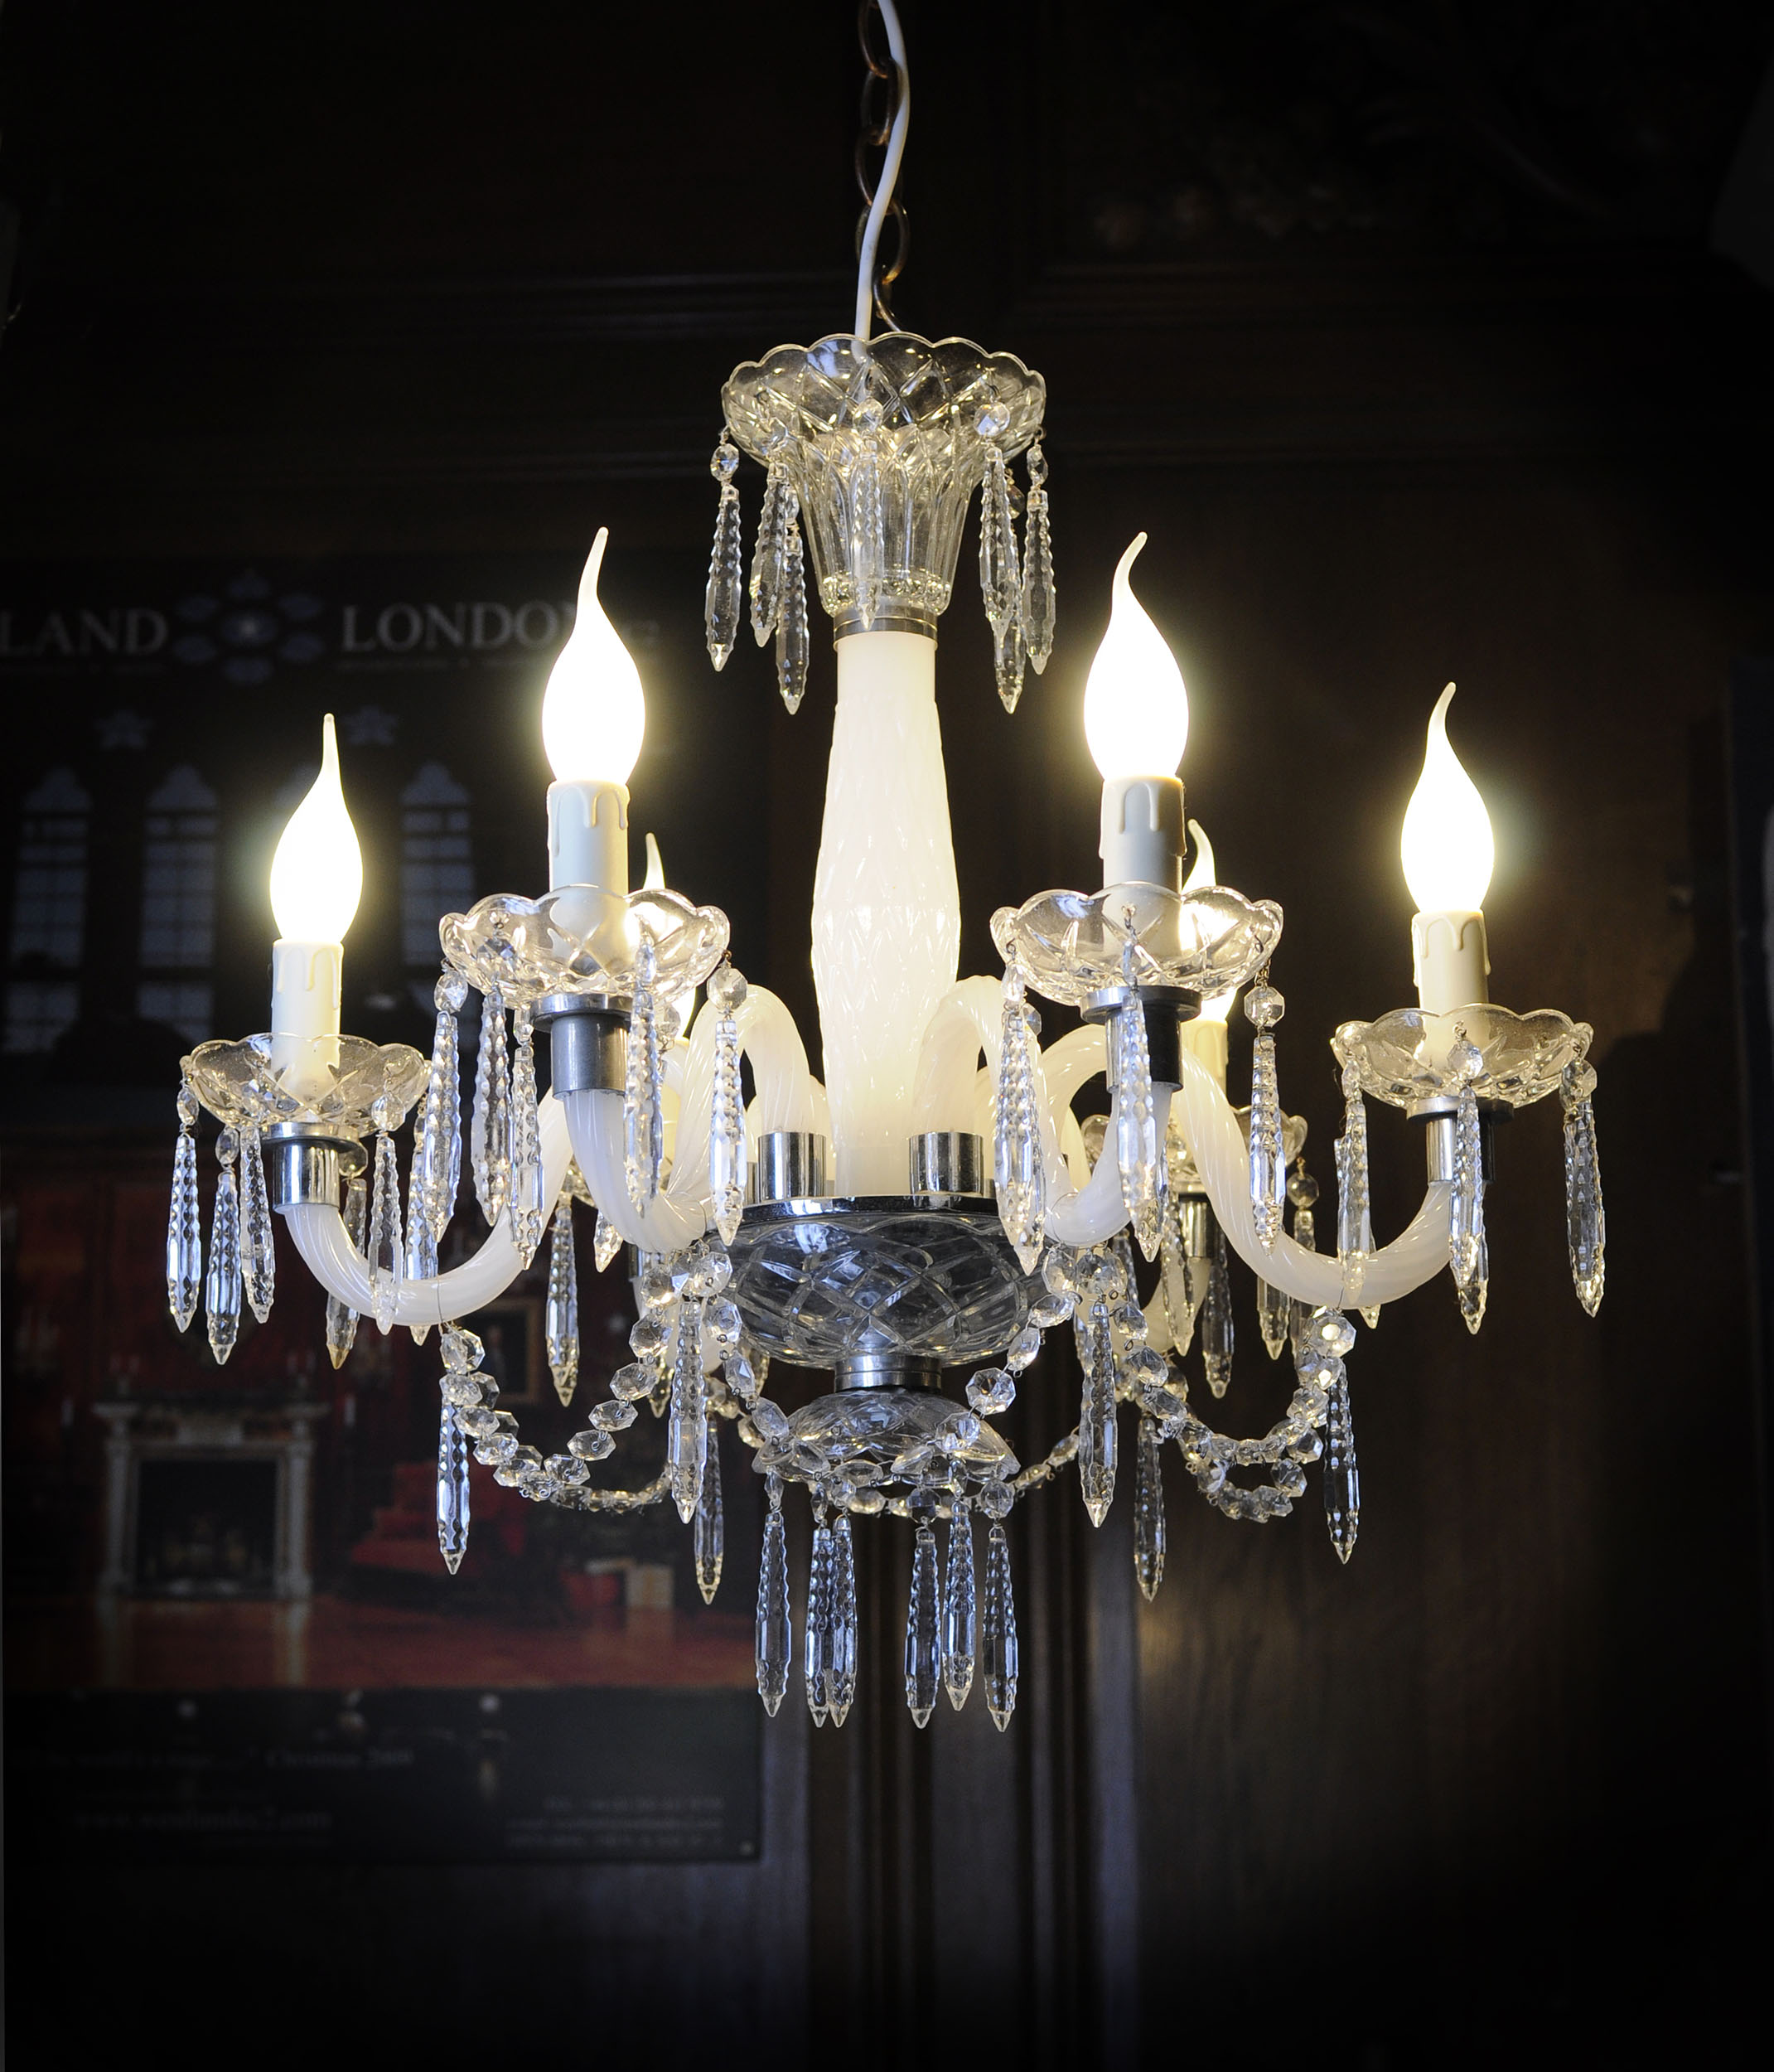 A small 20th century Murano glass chandelier